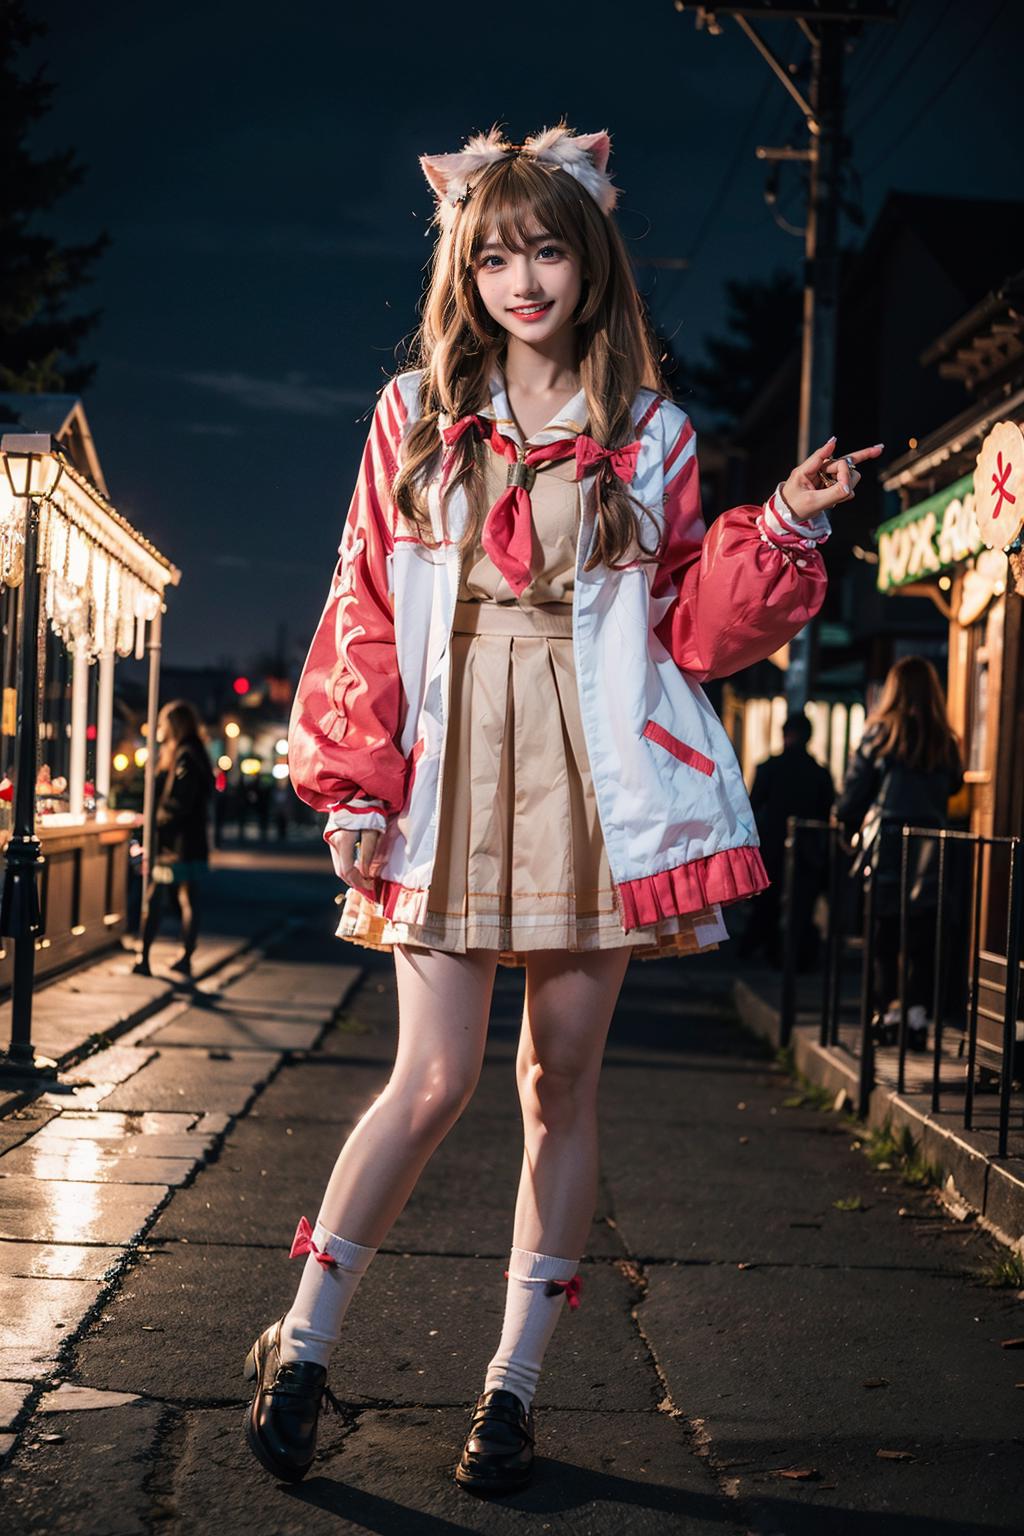 Japan Anime Cosplay Portrait Girl Cosplay Stock Photo 1495145570 |  Shutterstock